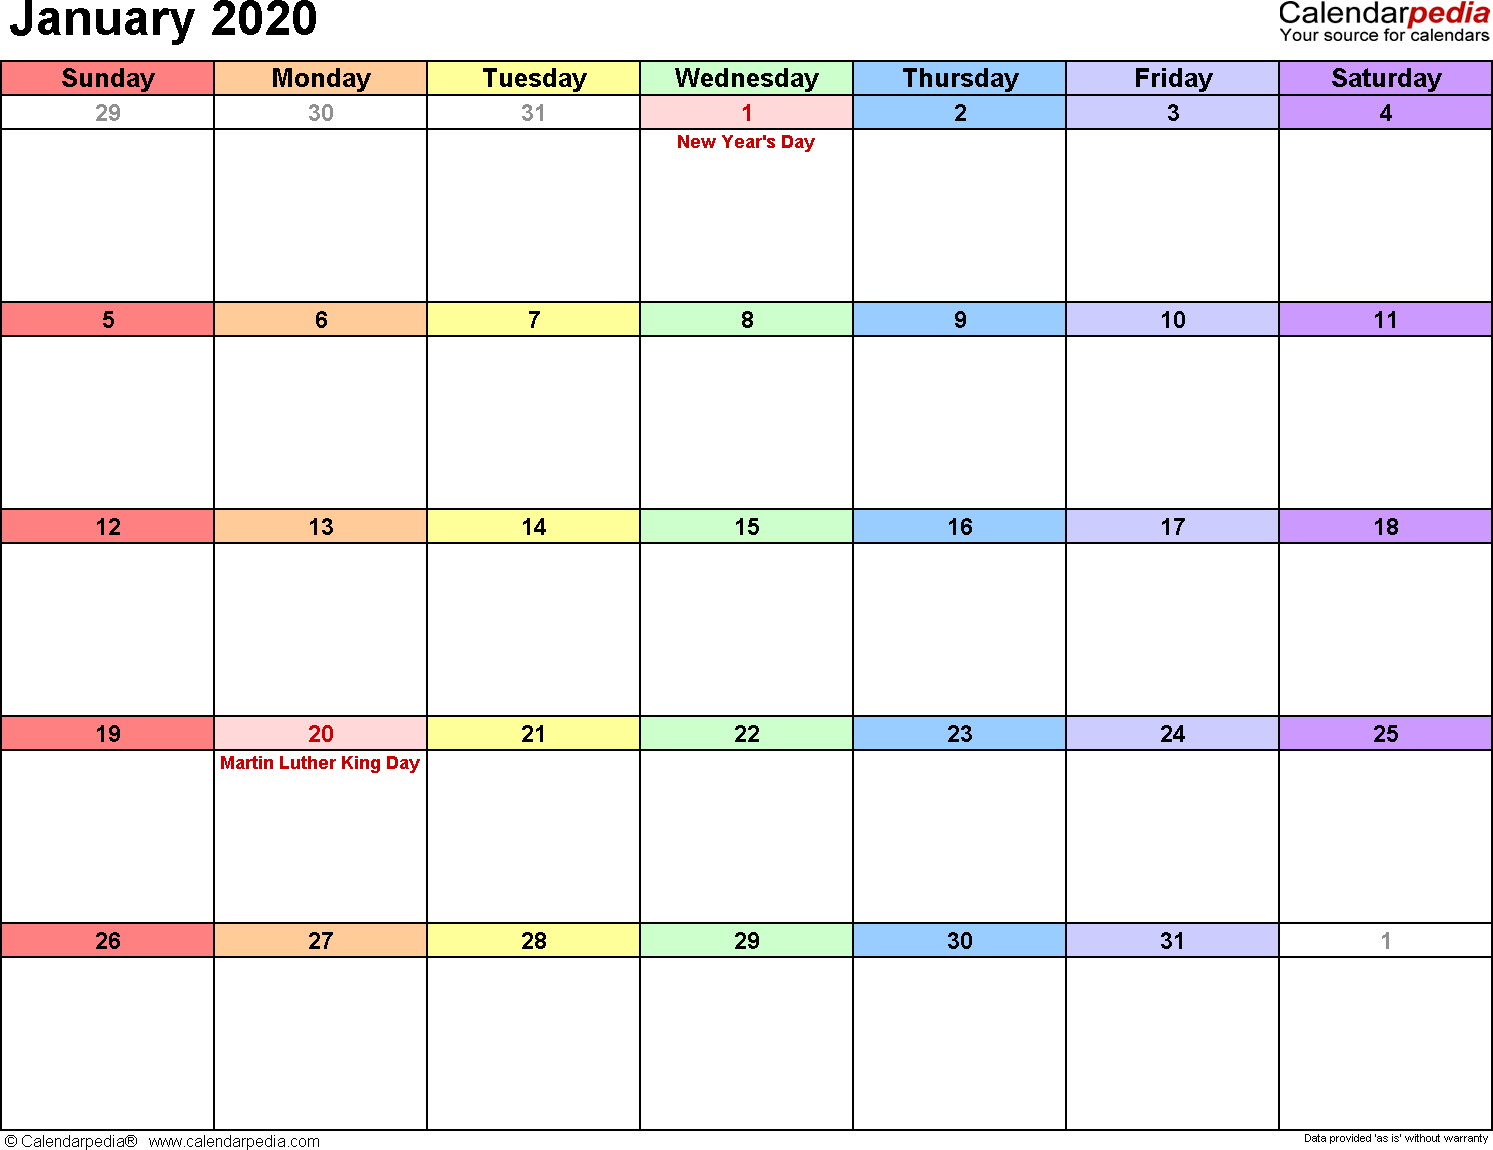 Calendarpedia  Your Source For Calendars throughout Calendarpedia January 2020